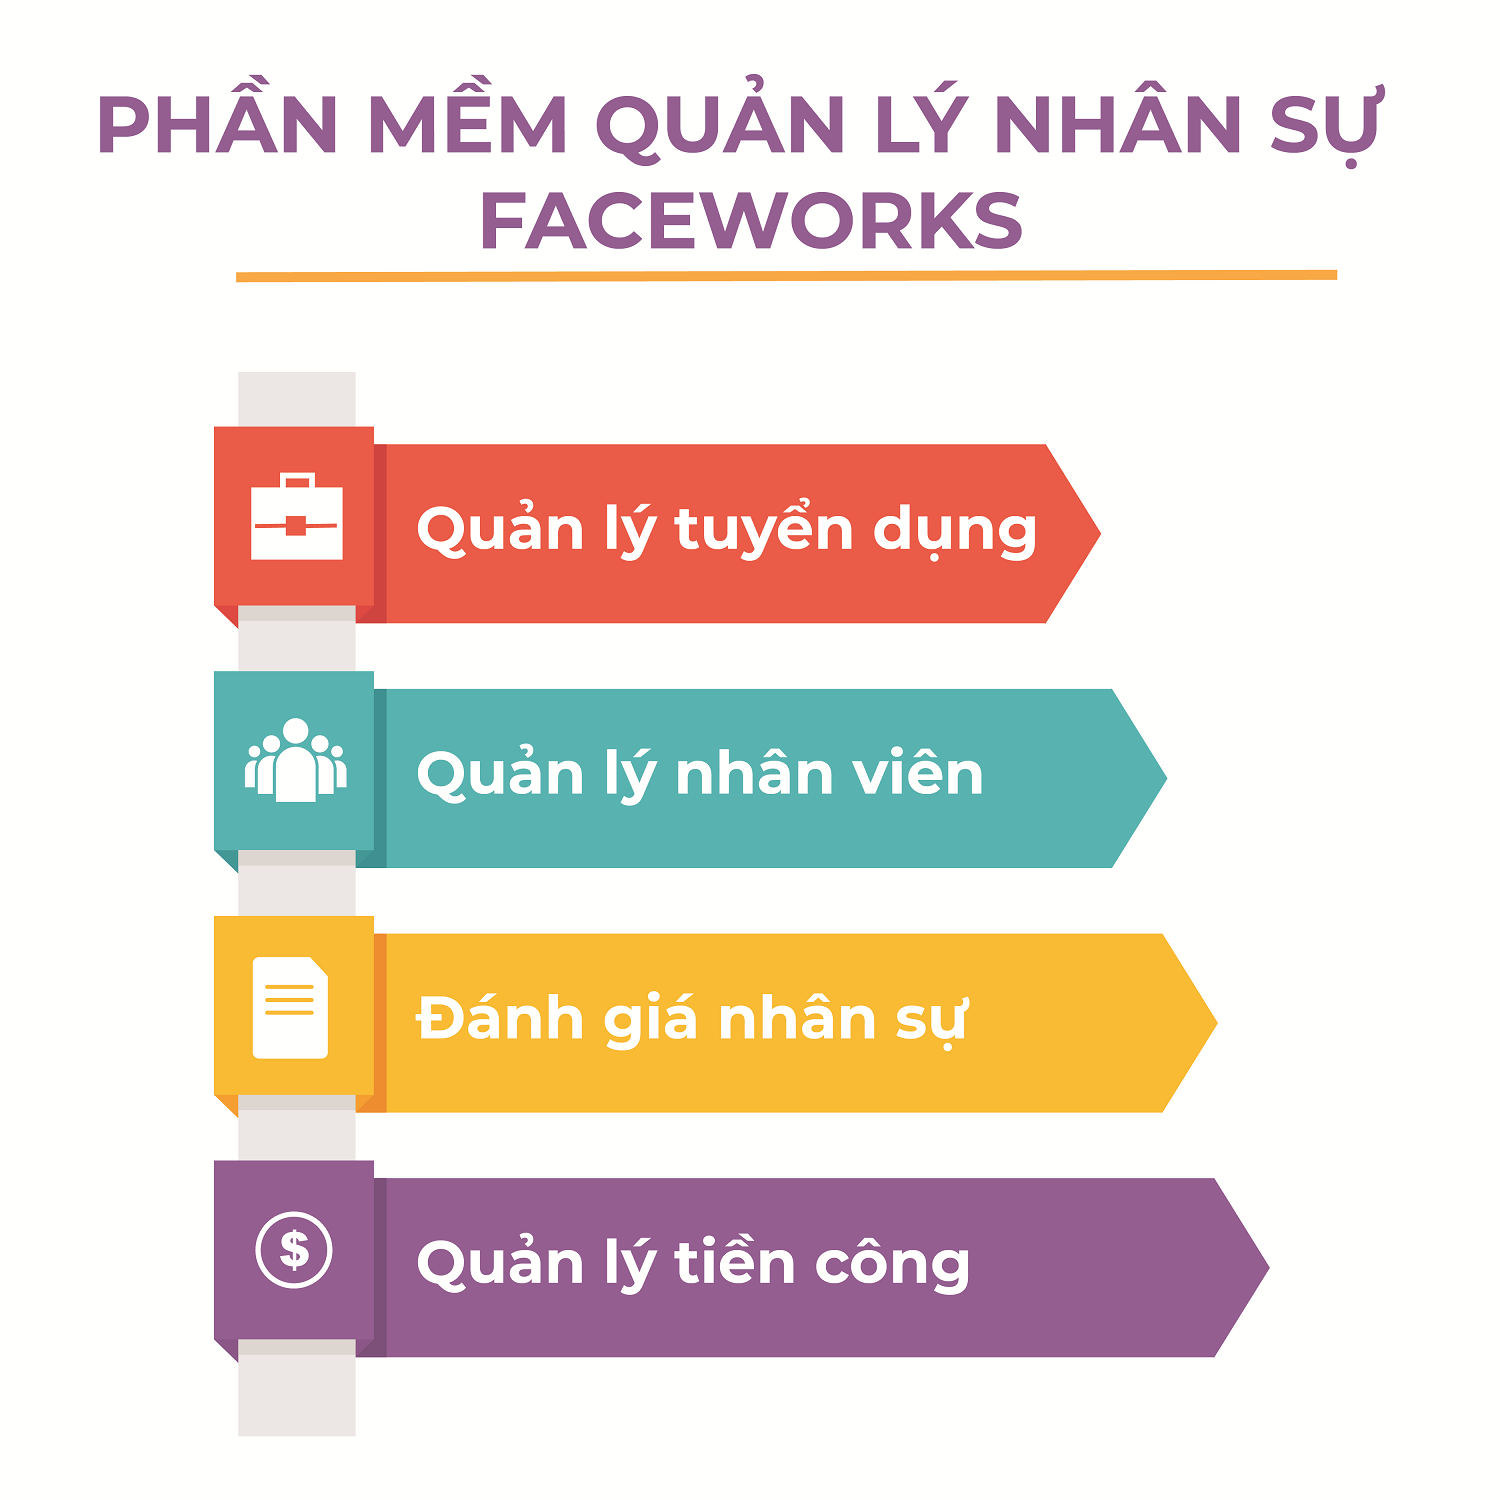 PHAN-MEM-QUAN-LY-NHAN-SU-FACEWORKS-01